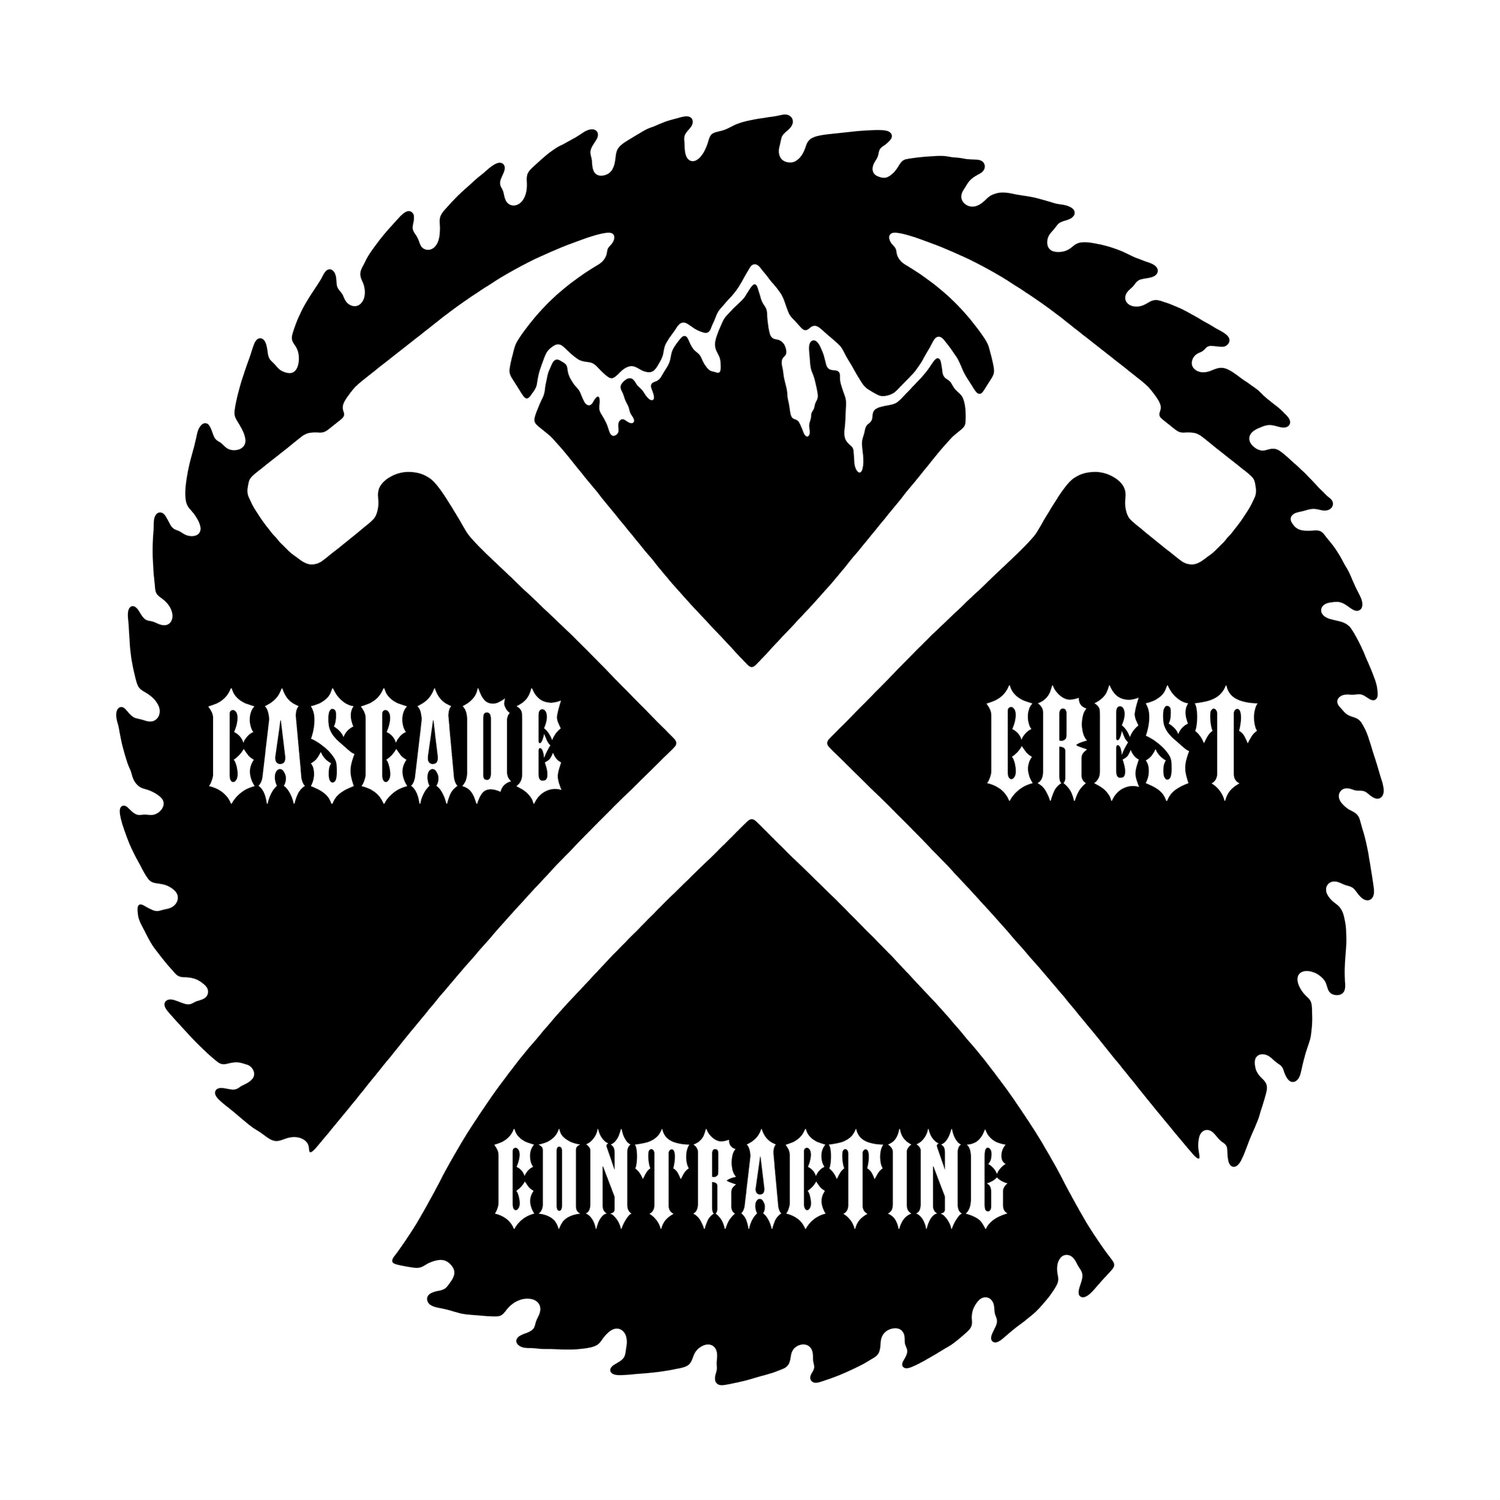 Cascade Crest Contracting (Copy)